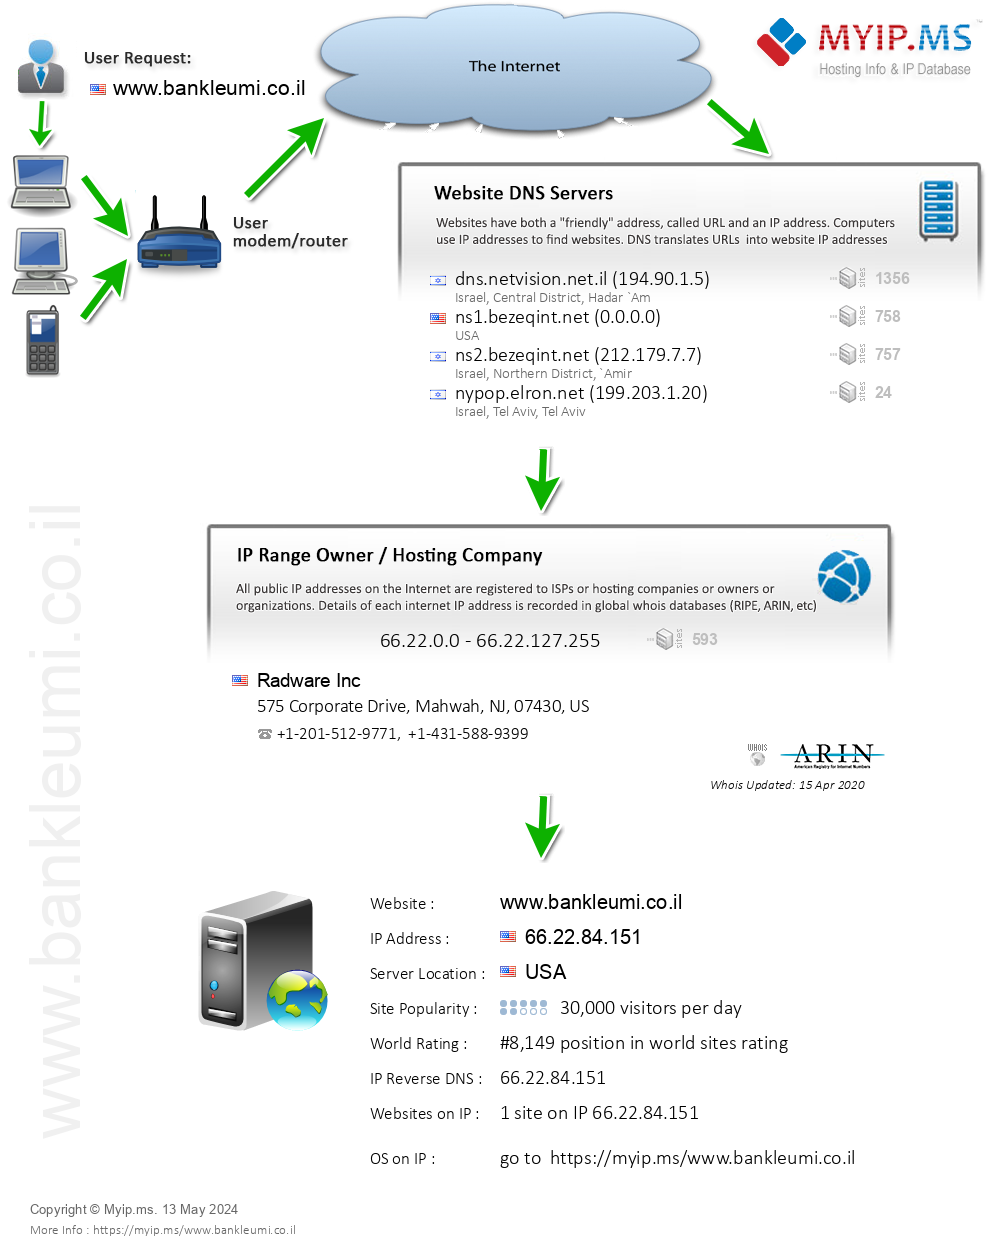 Bankleumi.co.il - Website Hosting Visual IP Diagram